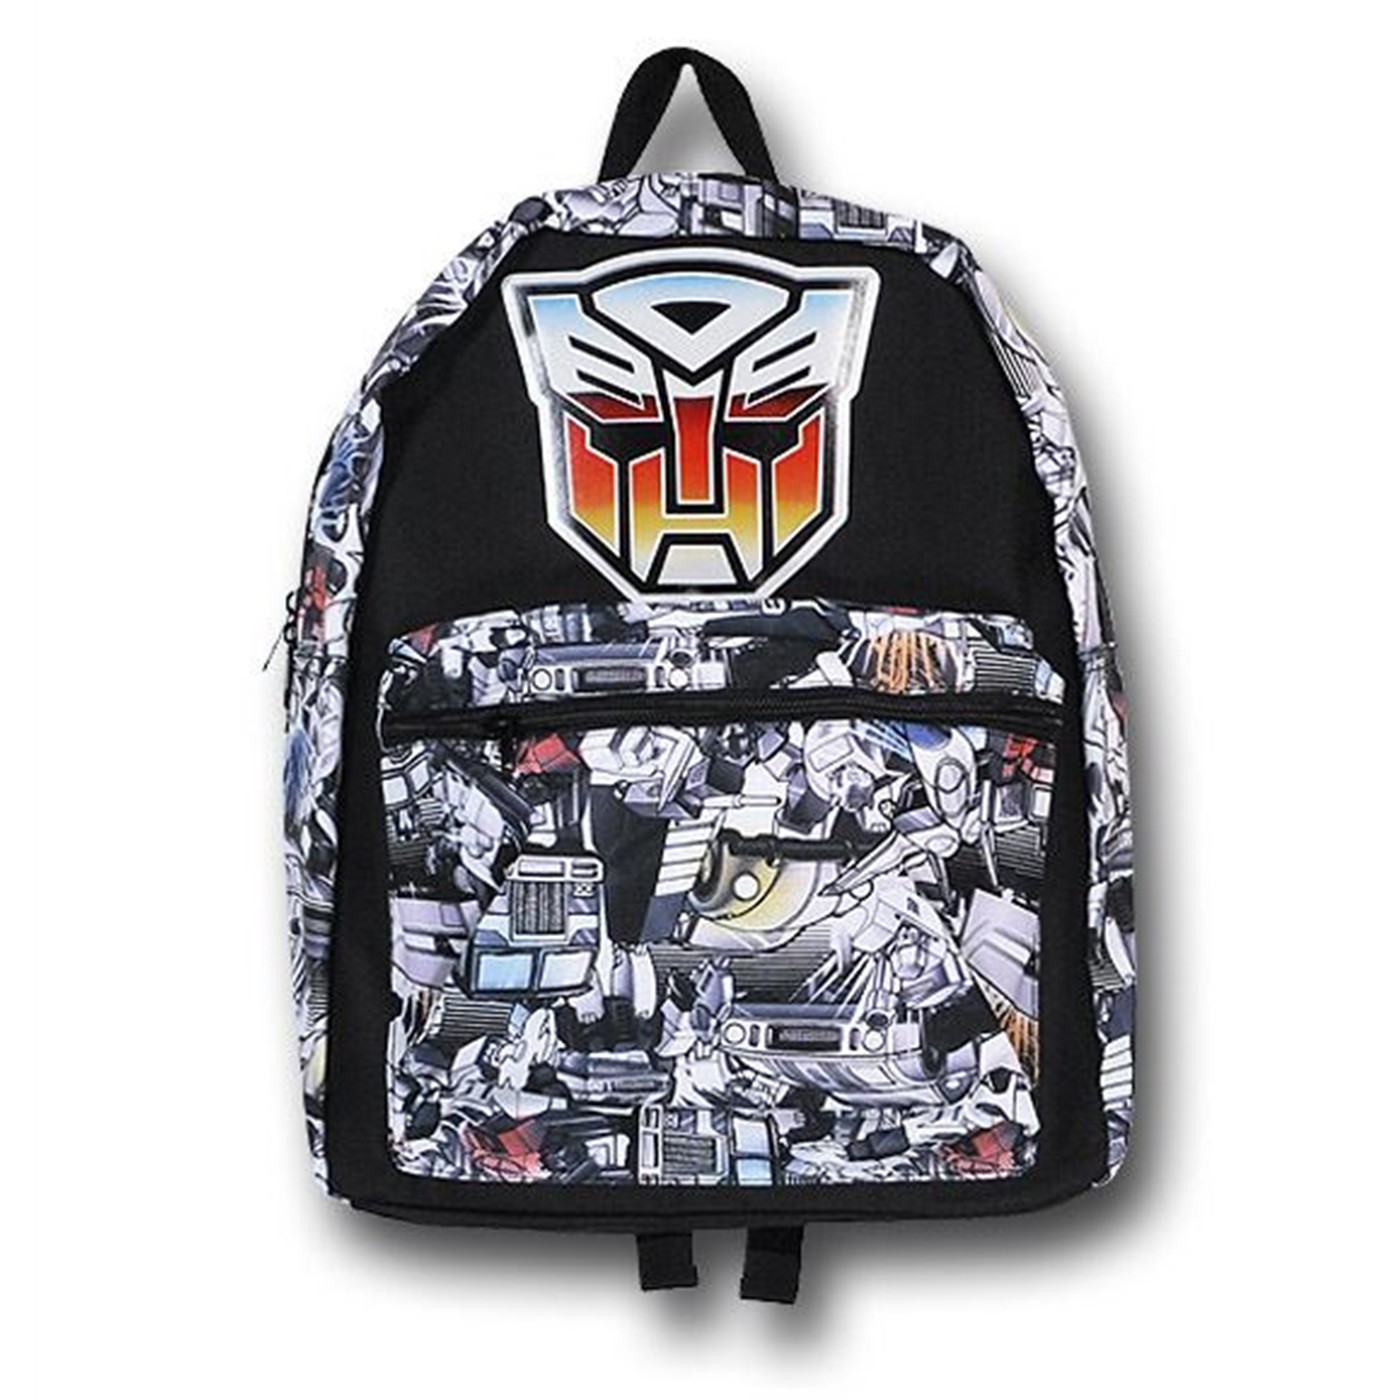 The Transformers Autobots VS Decepticons Cartoon Reversible School Backpack Bag 